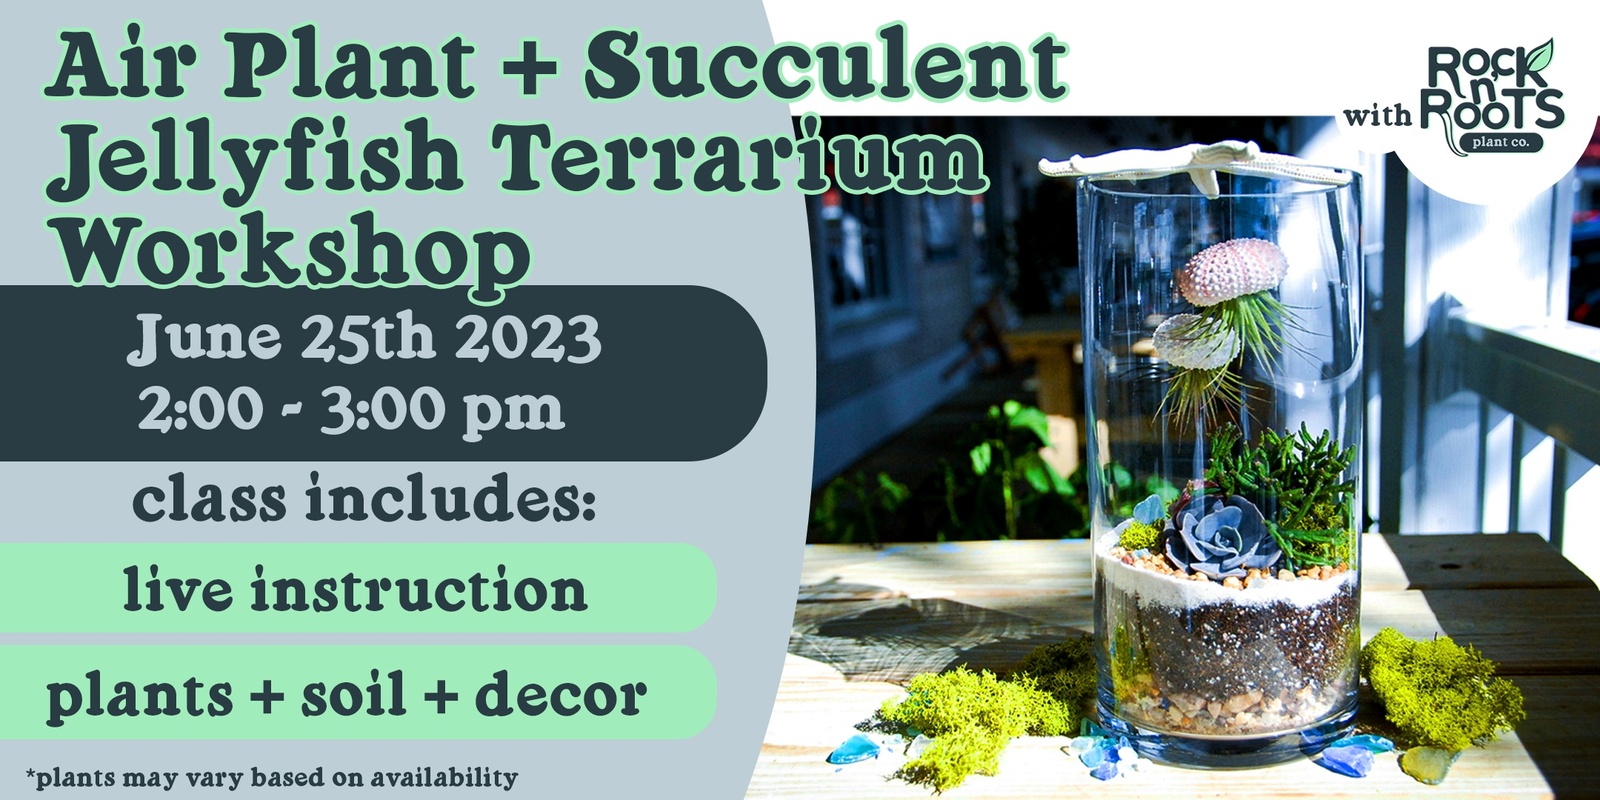 Air Plant + Succulent Jellyfish Terrarium Workshop at Rock n' Roots Plant Co. (Pawleys Island, SC)